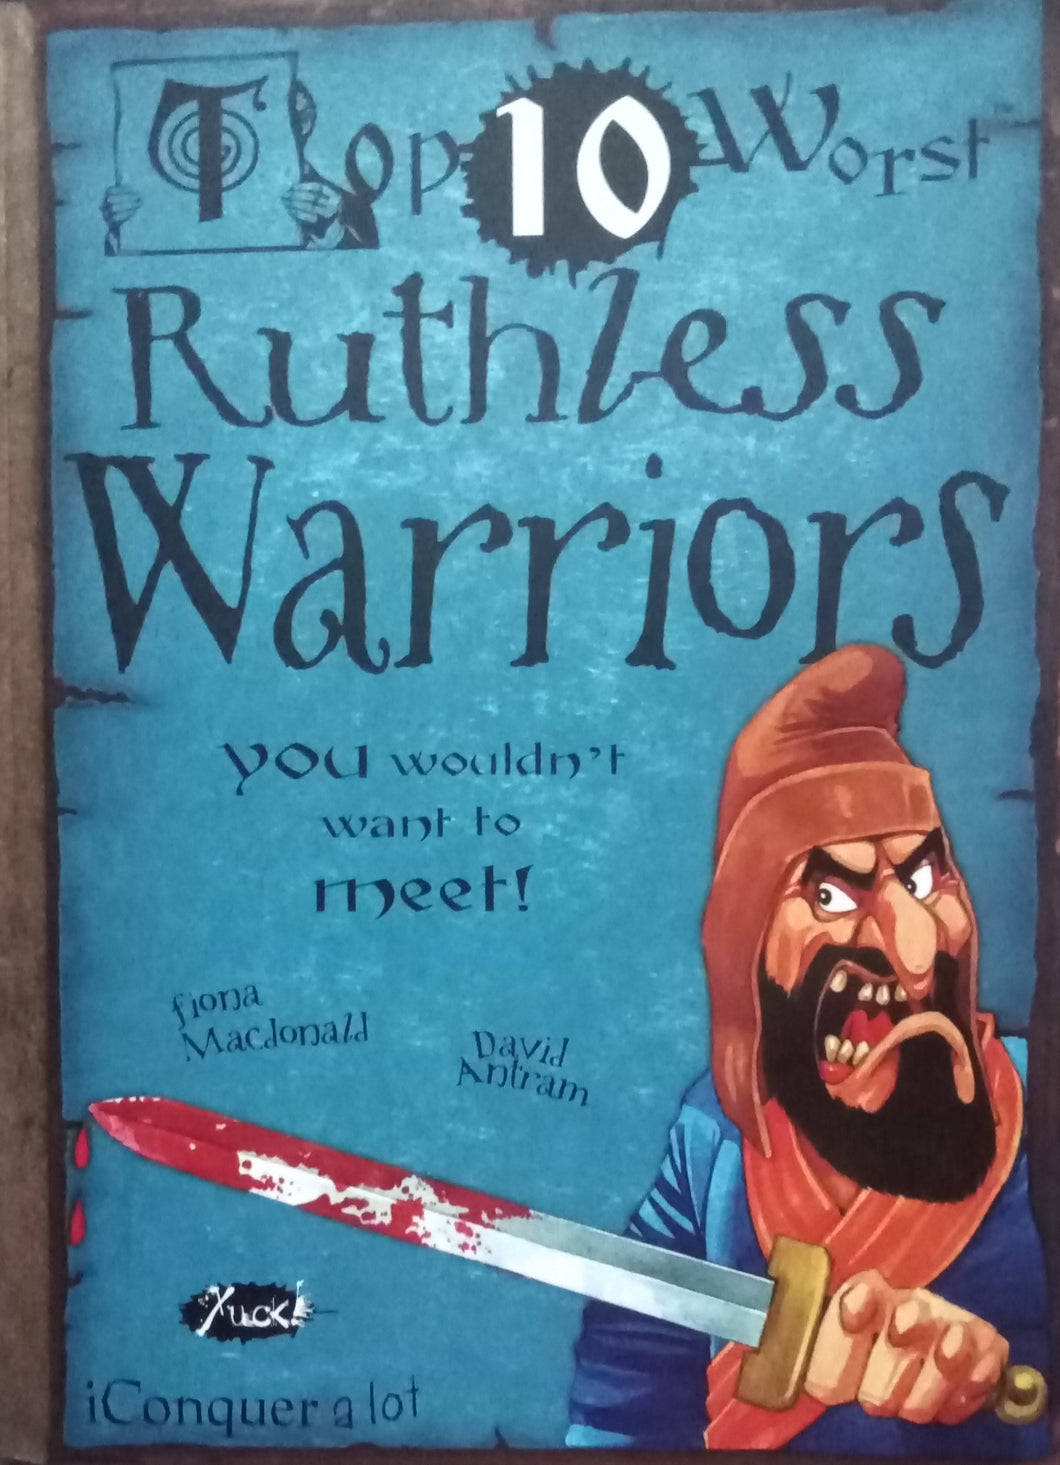 Top 10 Worst Ruthless Warriors By Fiona Macdonald And David Antram